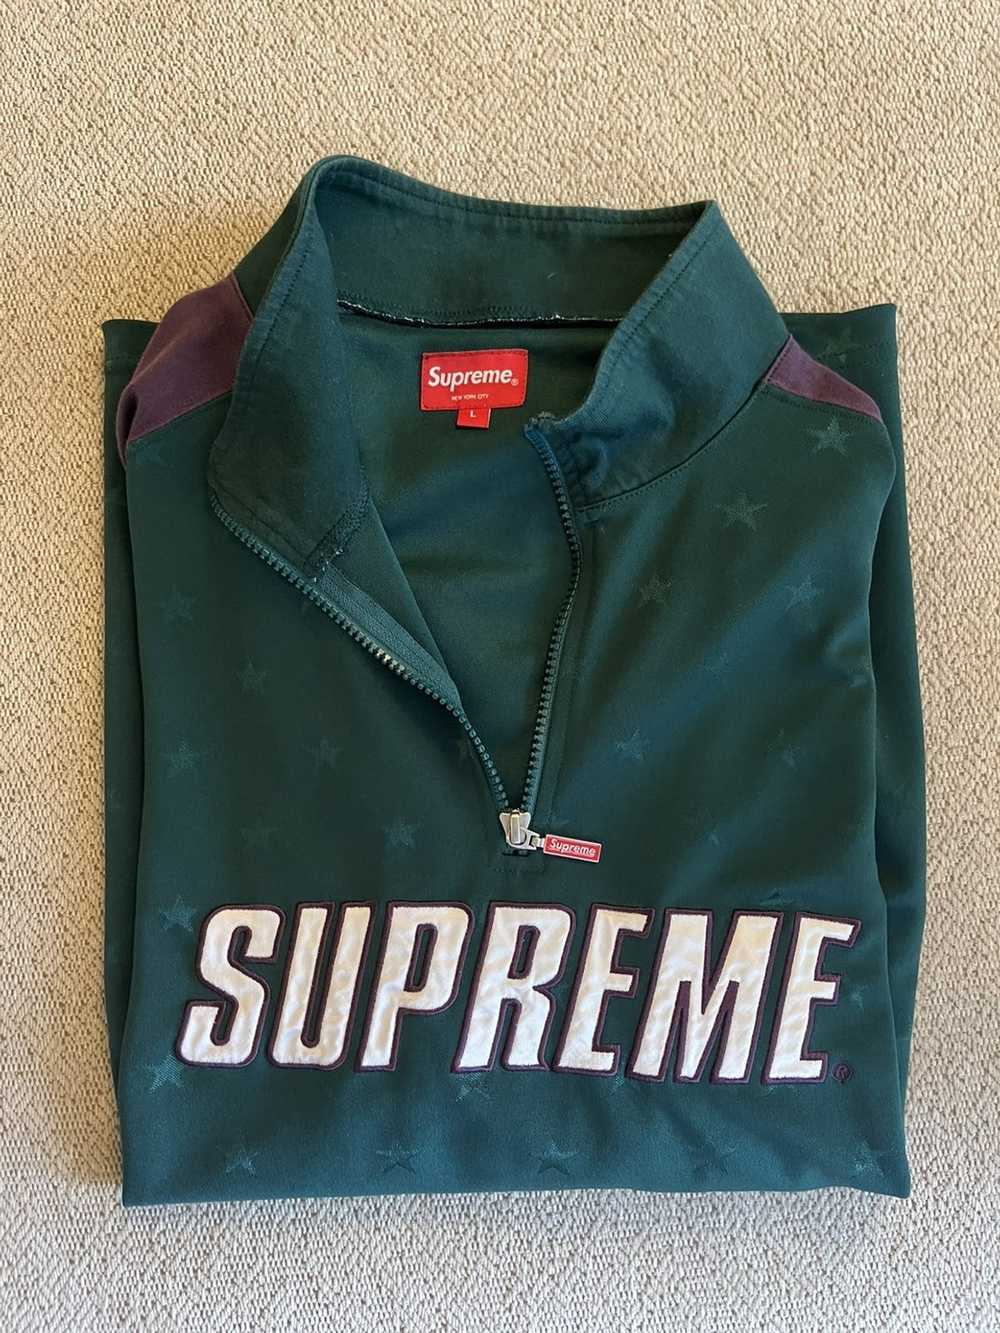 Supreme Supreme Half-Zip Sweater Jacket - image 3